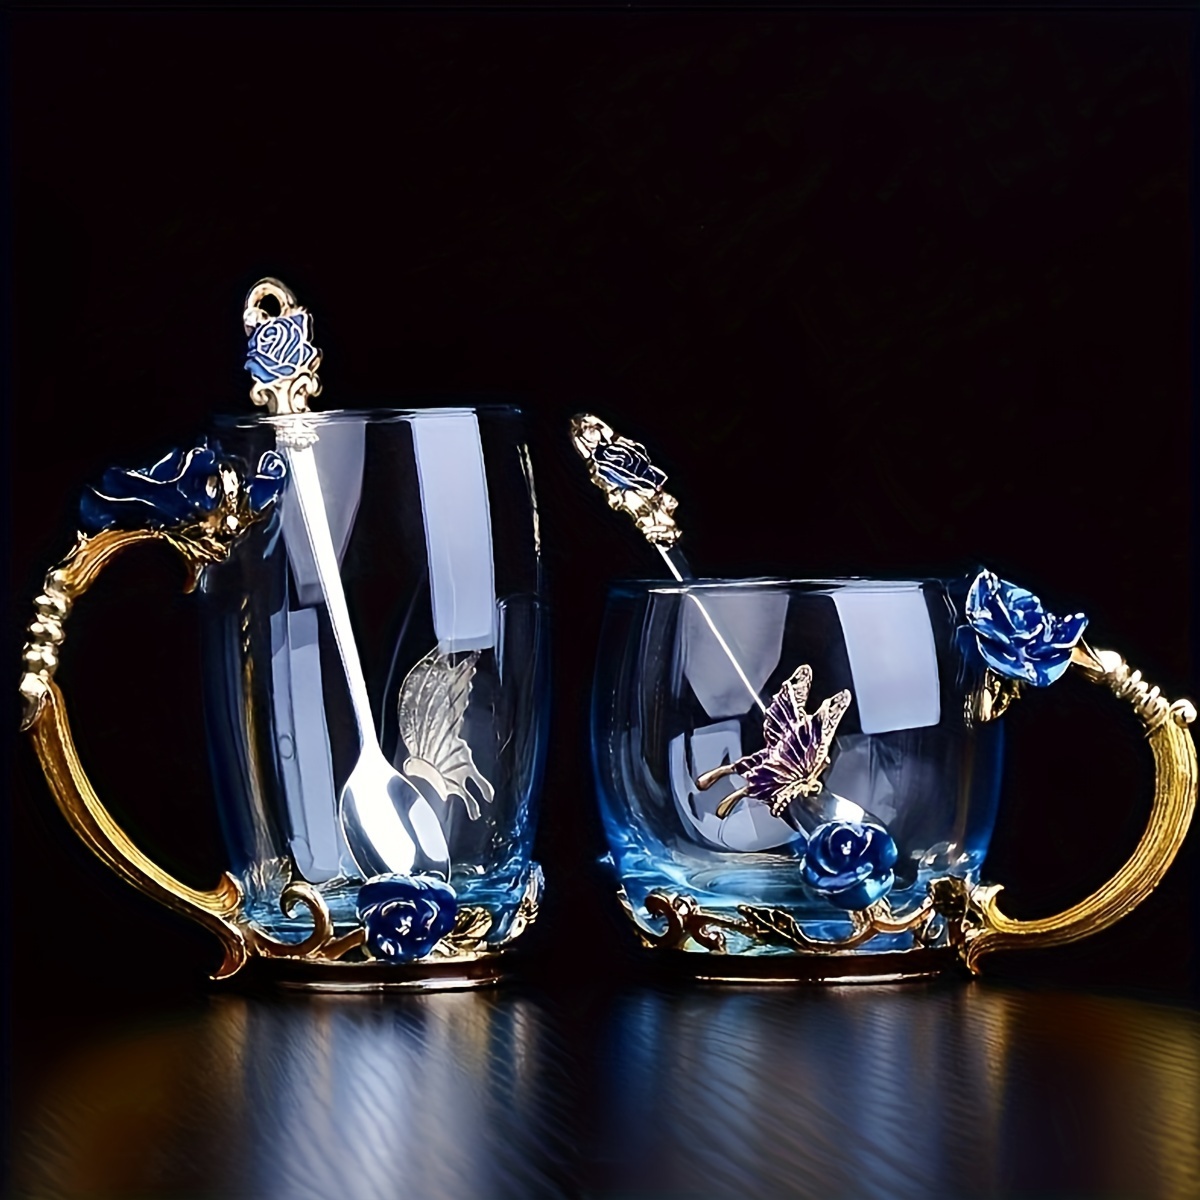 Coffee and Tea Glassware